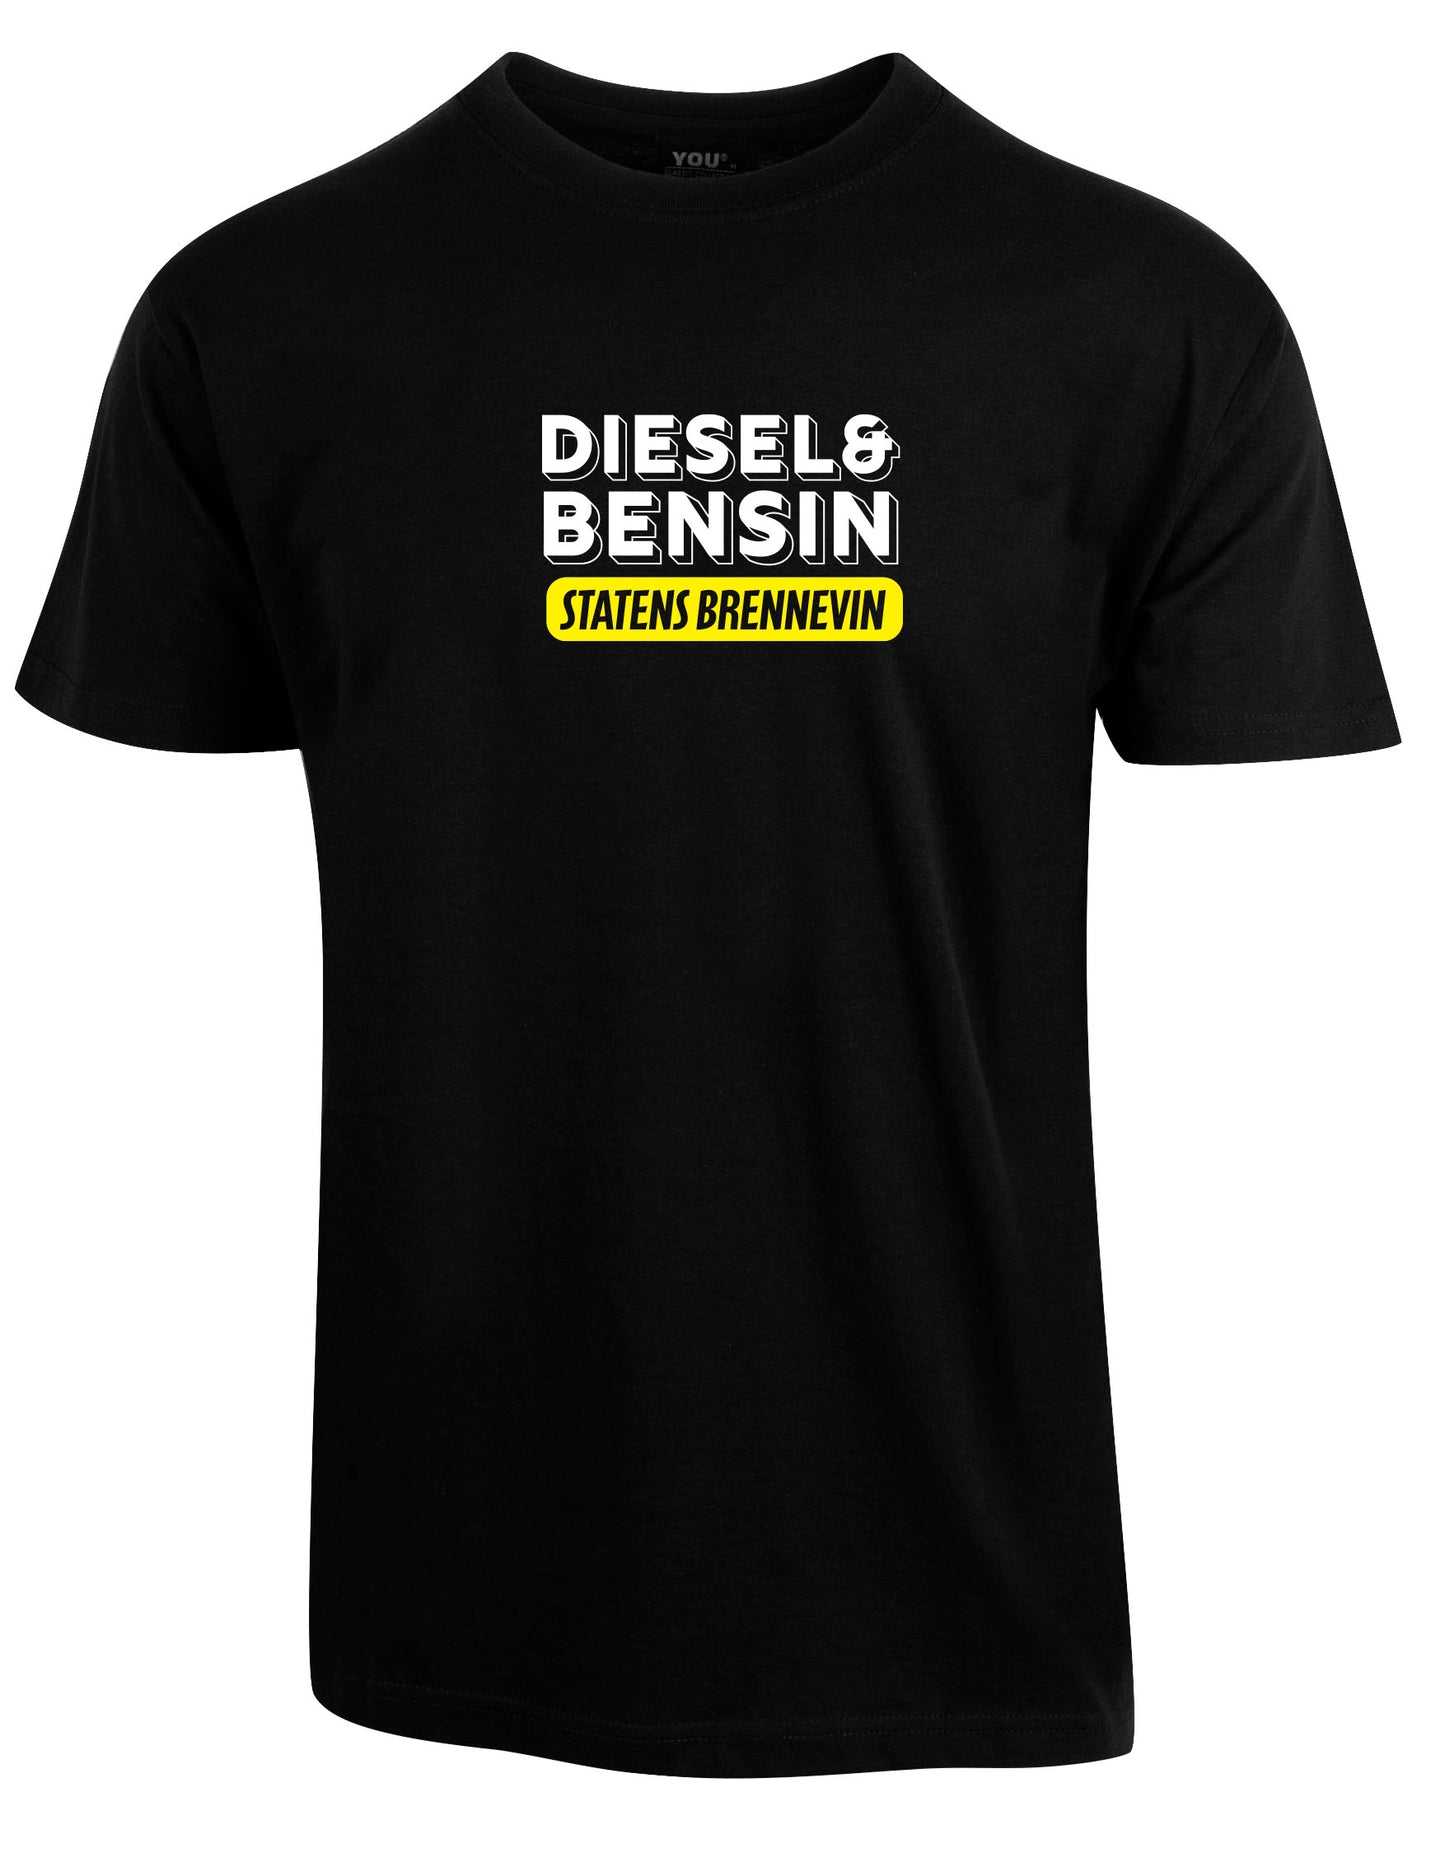 Diesel & Bensin - t-skjorte